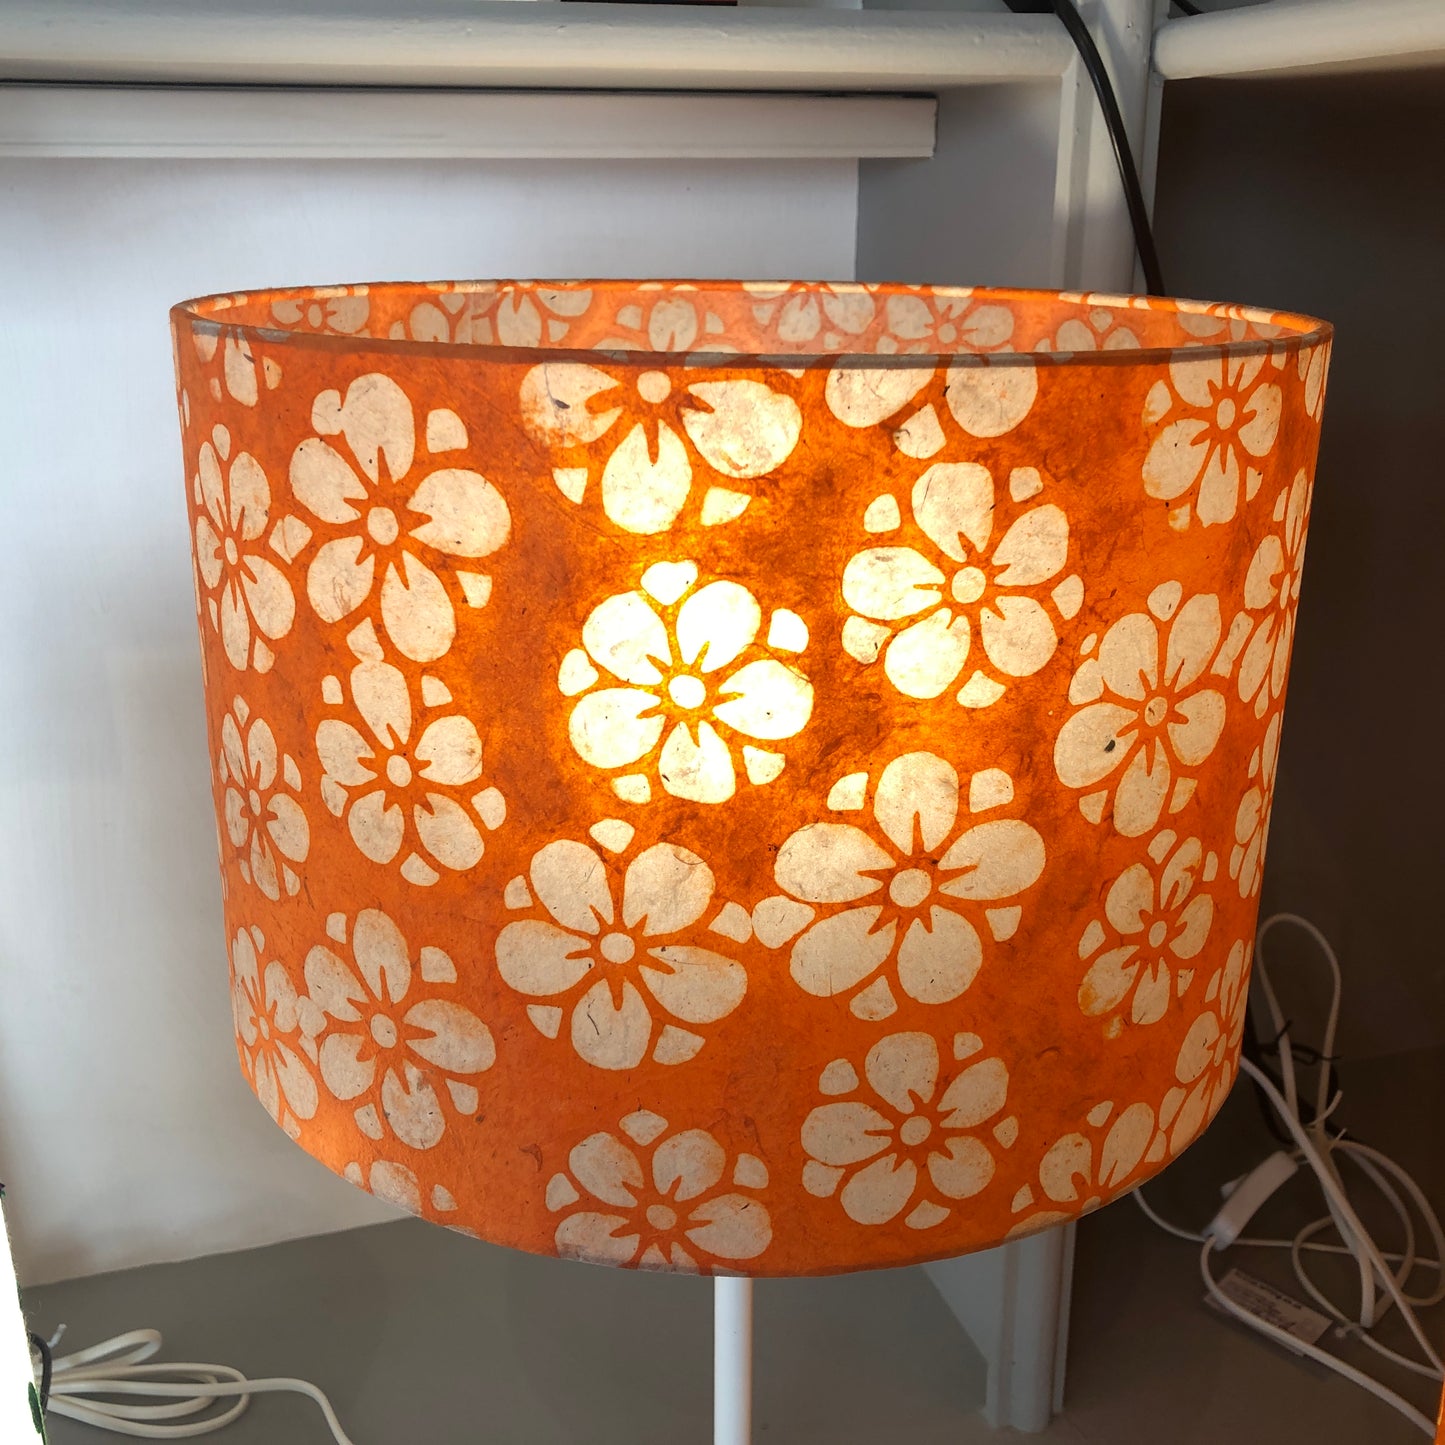 2 Tier Lamp Shade - P94 - Batik Star Flower on Orange, 40cm x 20cm & 30cm x 15cm